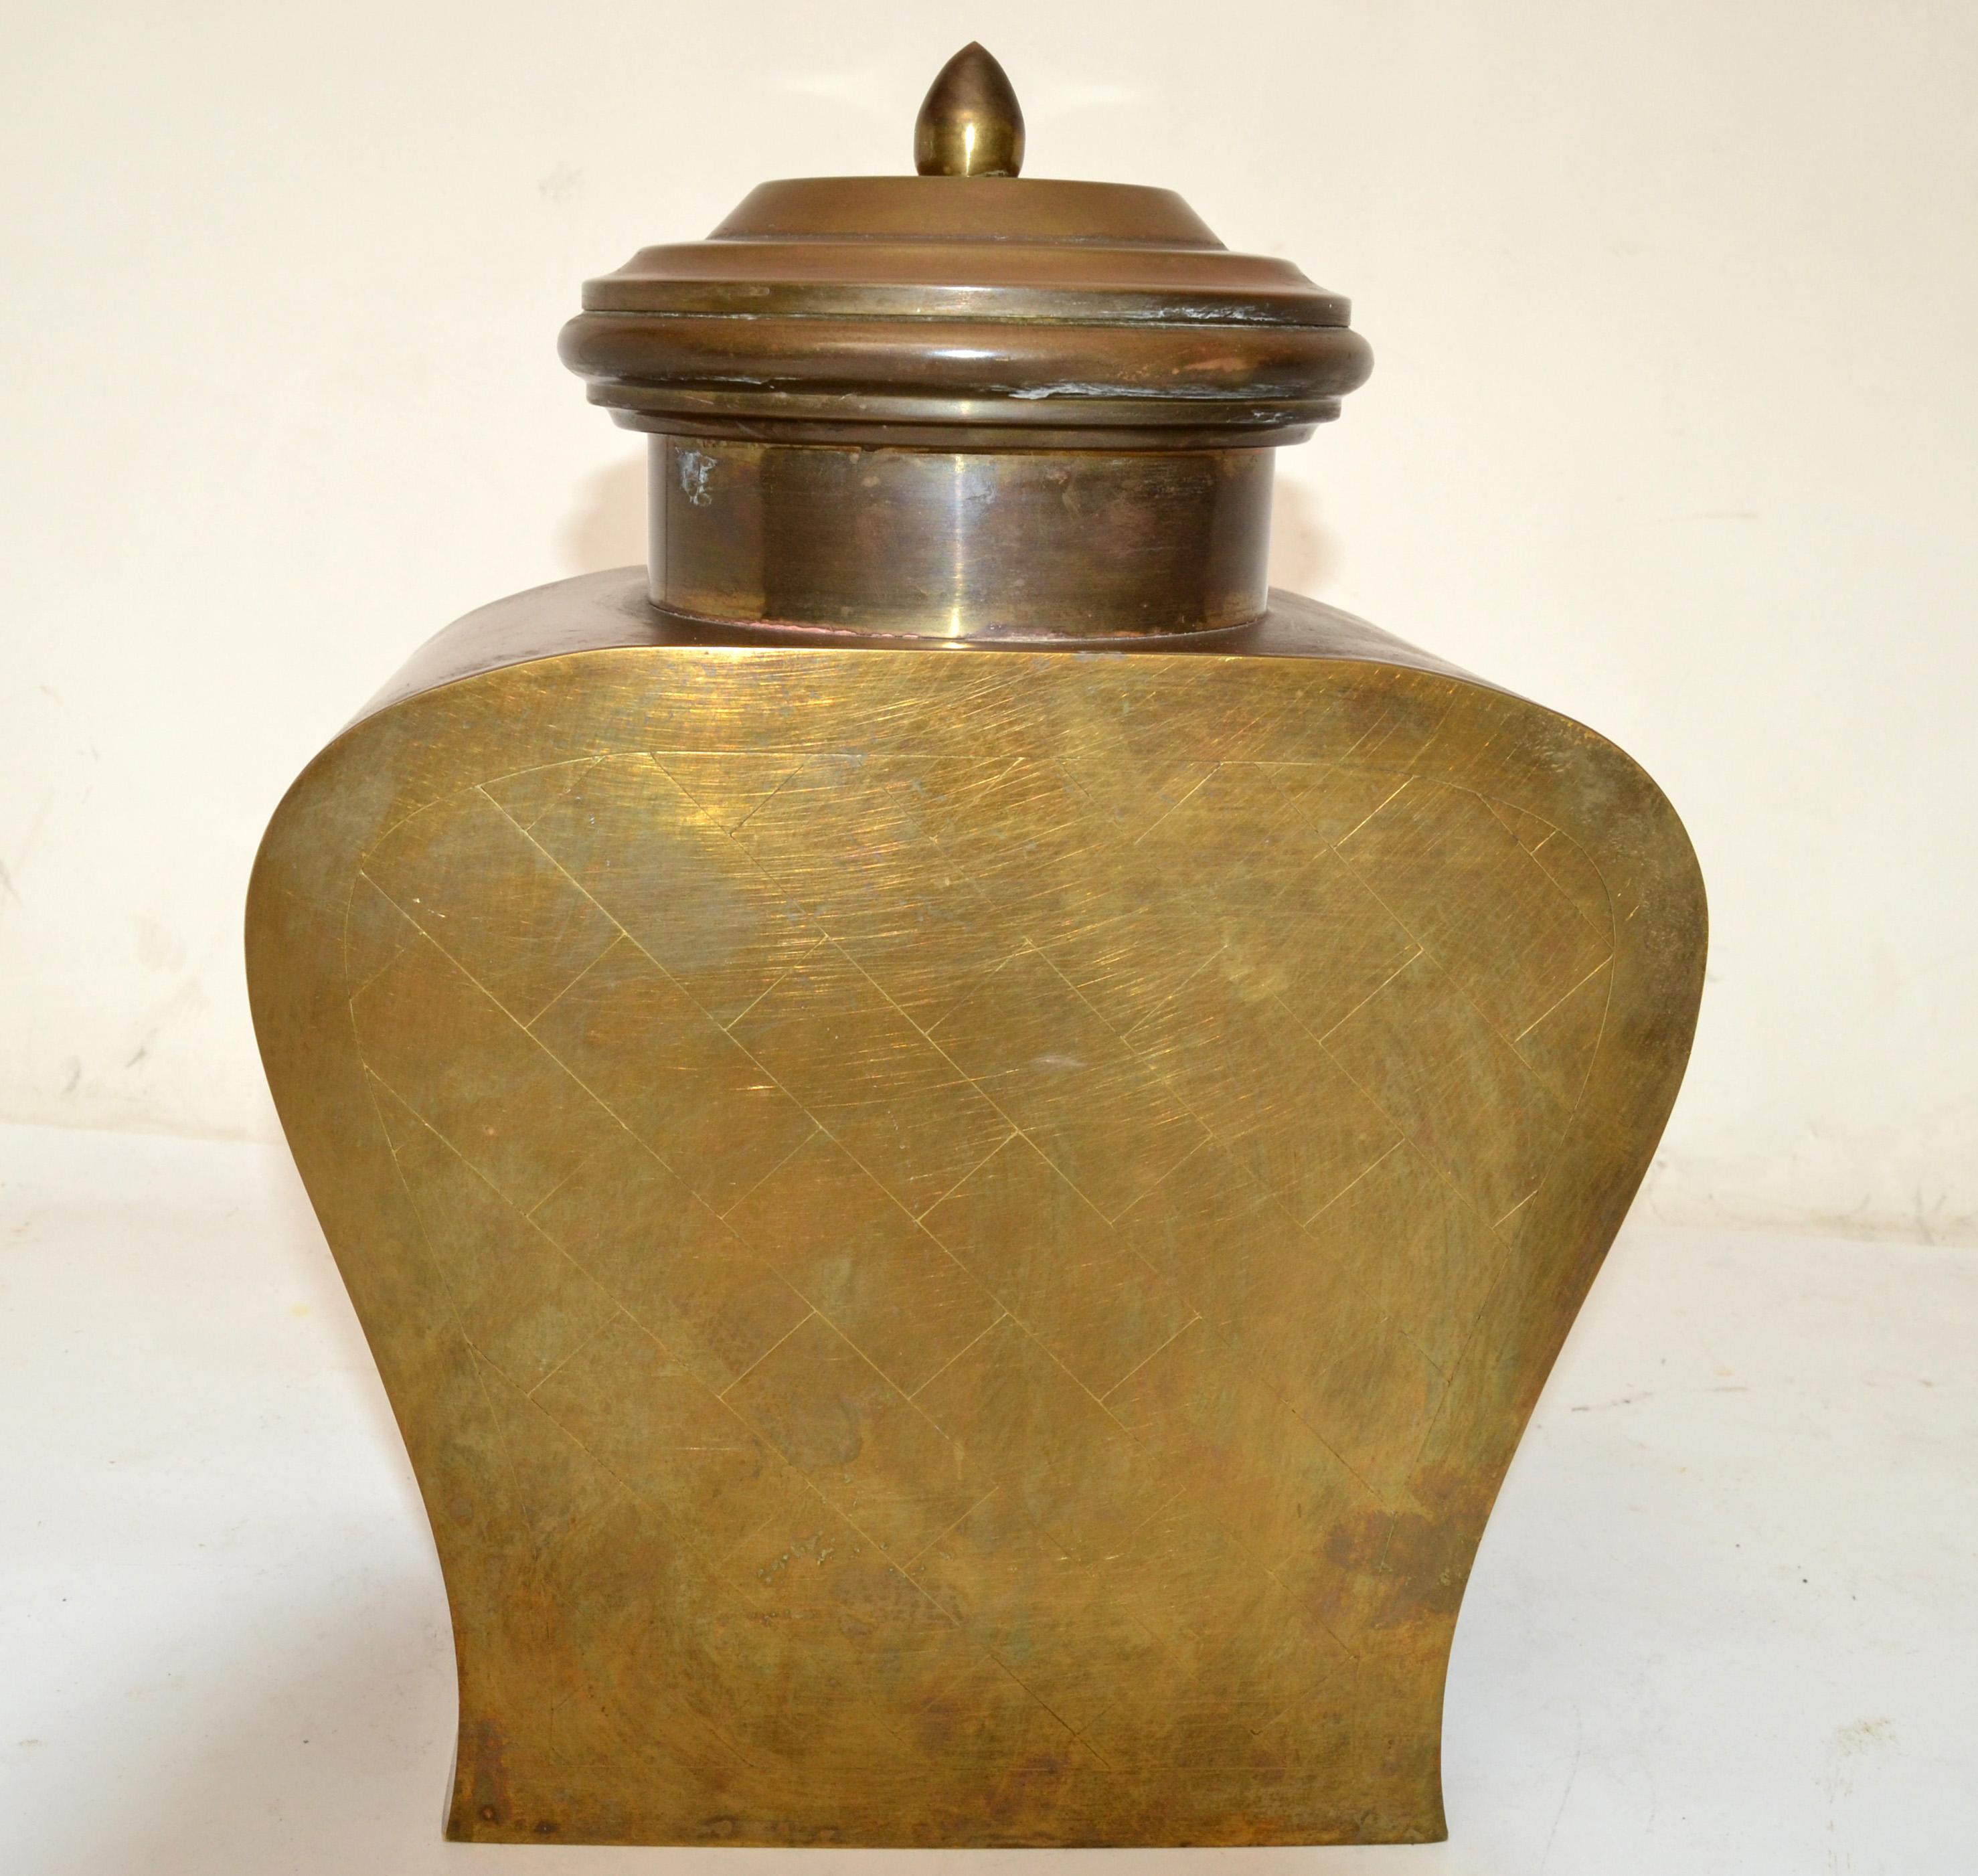 Lidded Tinned Brass Urn Asian Influenced Mid-Century Modern Vessel, 1960 For Sale 5